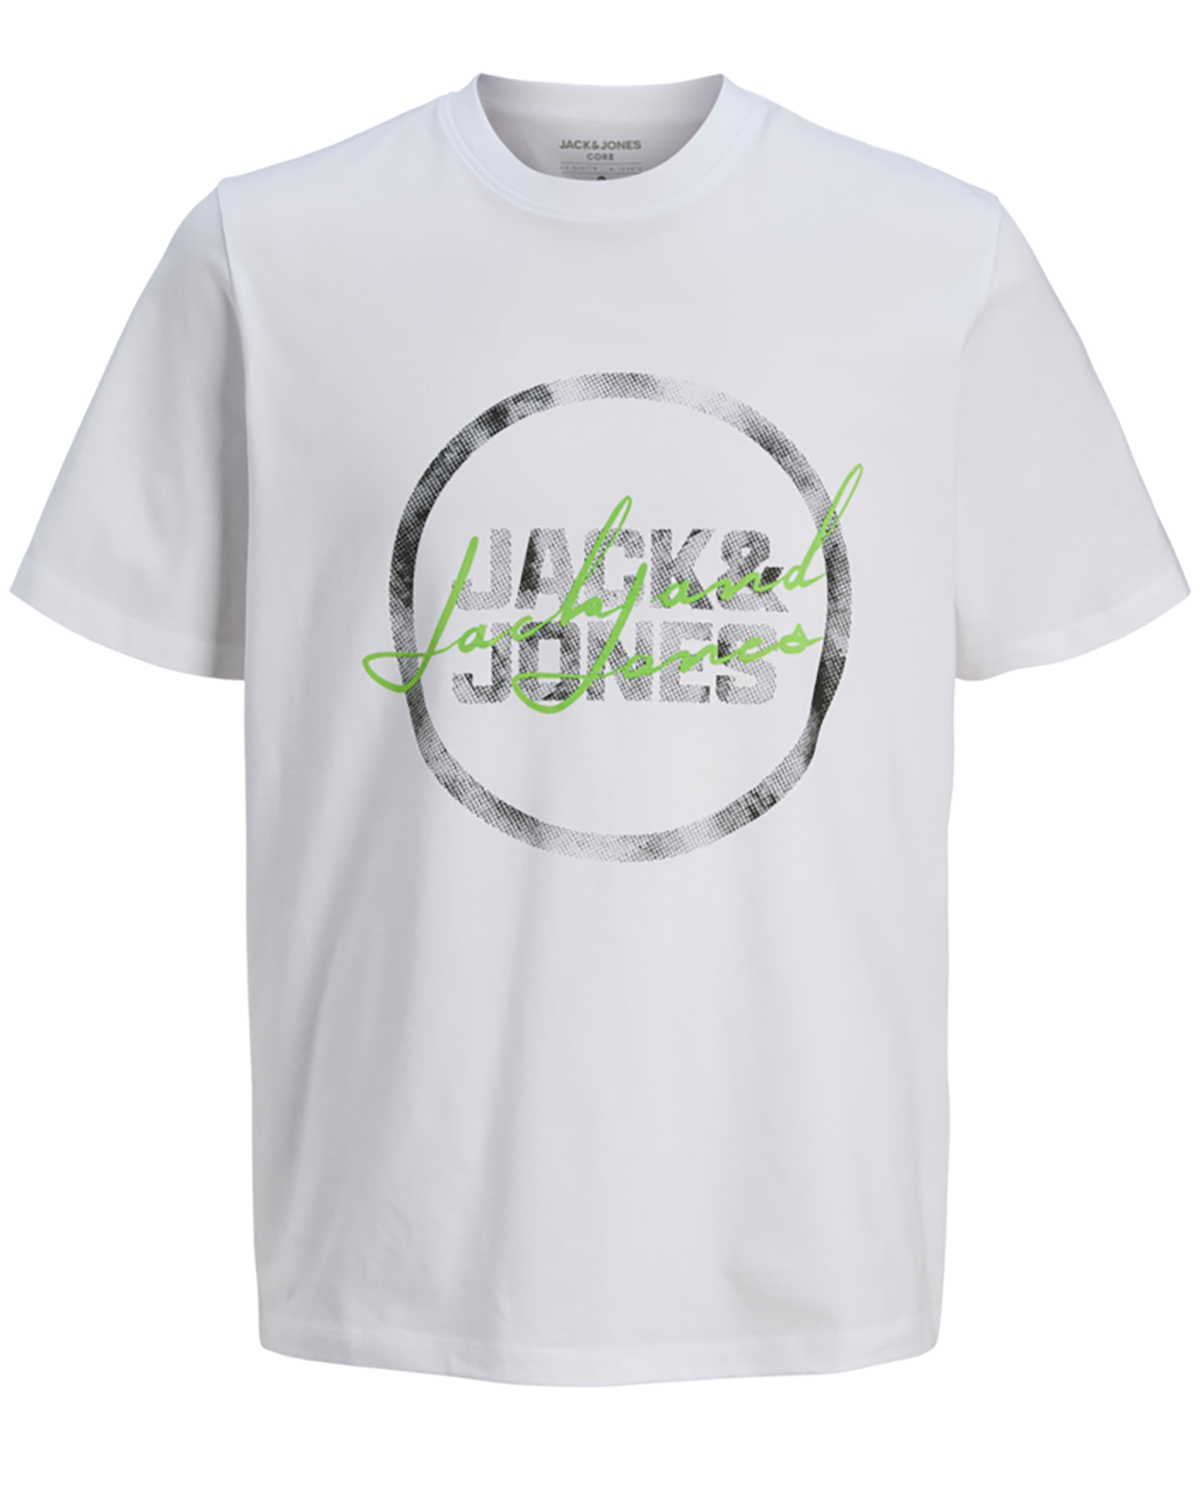 Se Jack & Jones t-shirt s/s, Script tee, hvid - 182,M+,M hos Umame.dk